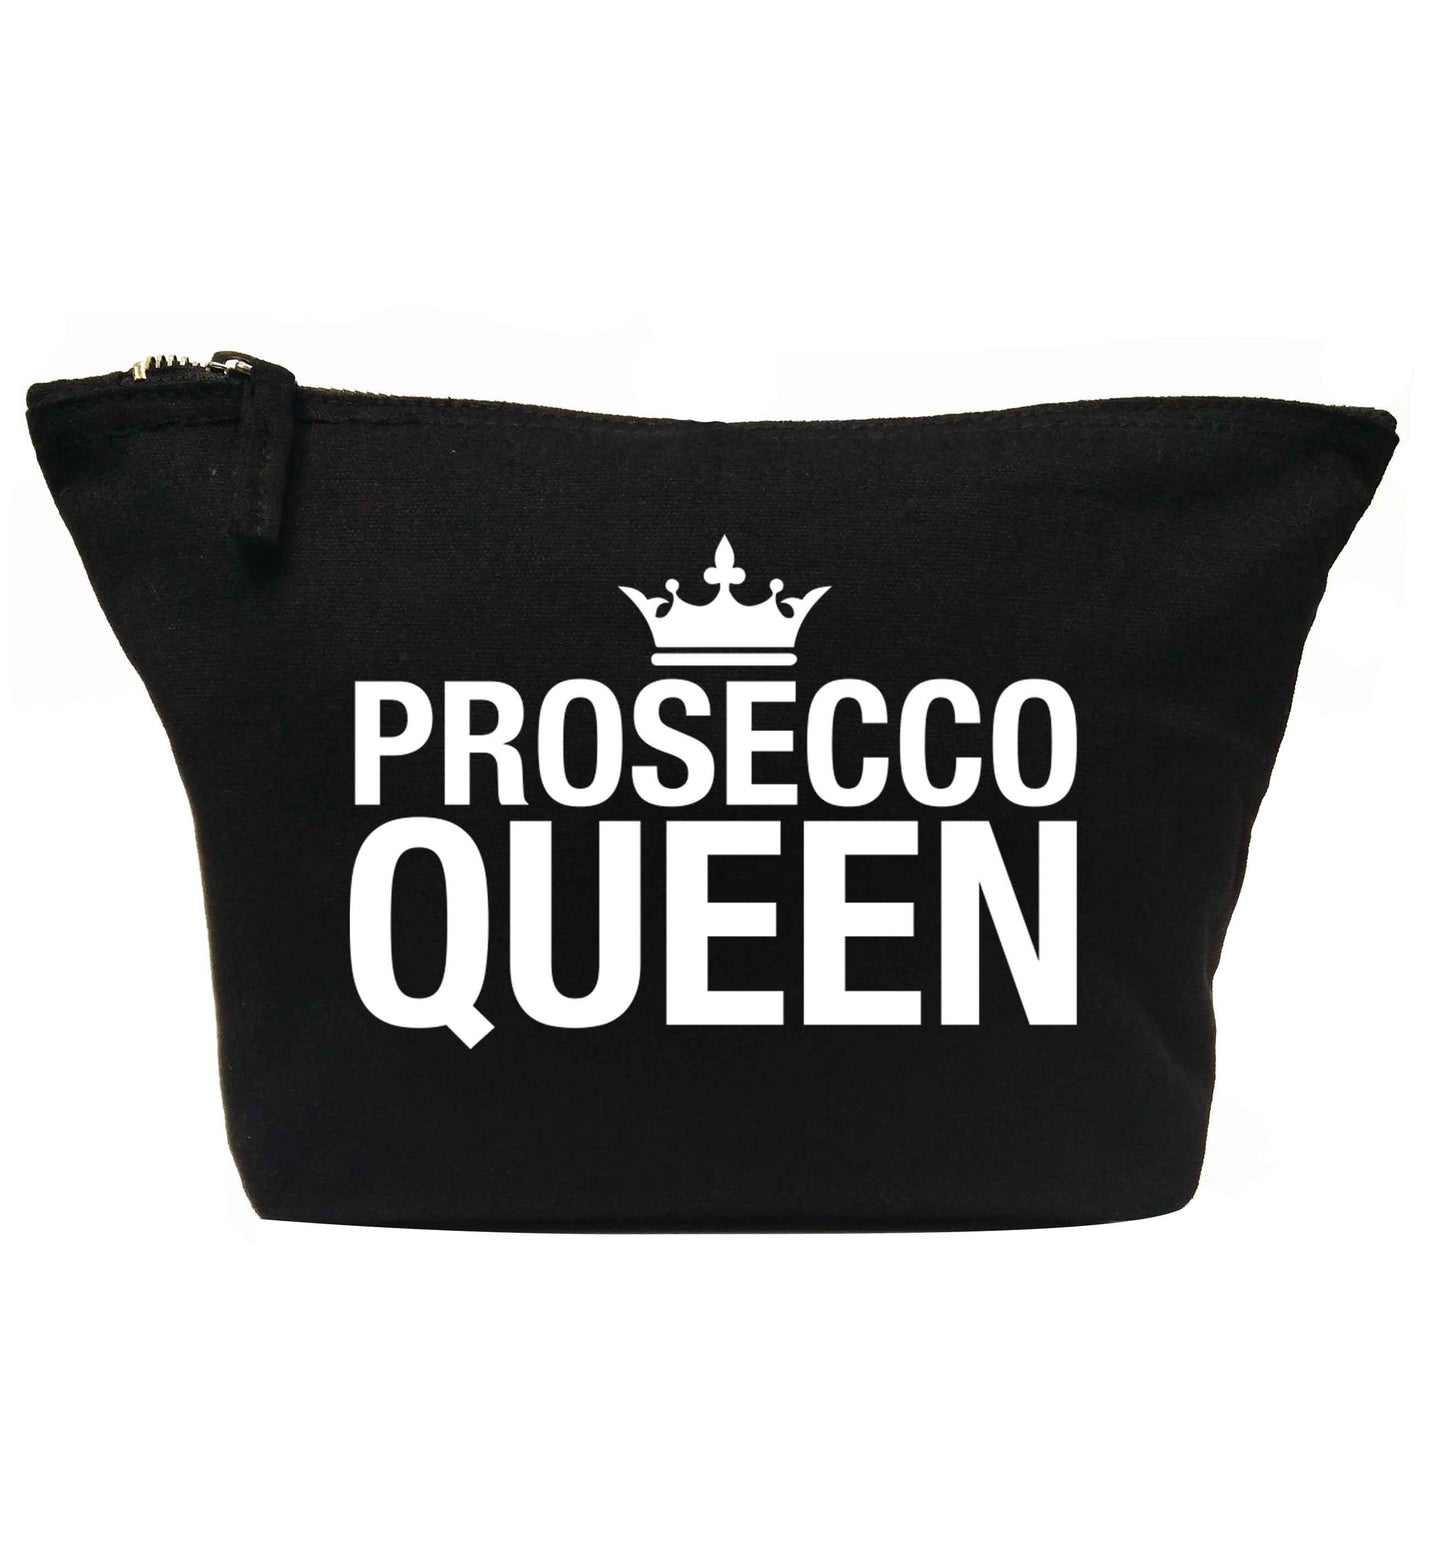 Prosecco queen | makeup / wash bag